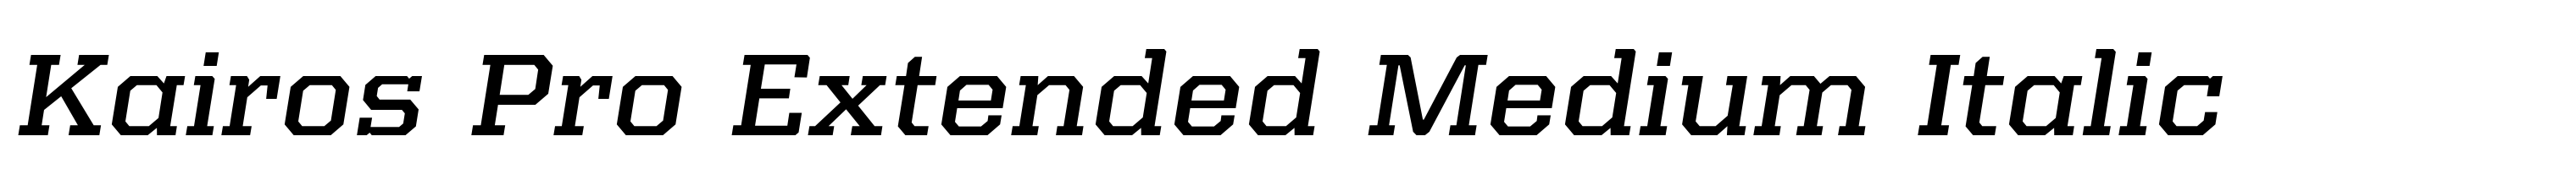 Kairos Pro Extended Medium Italic